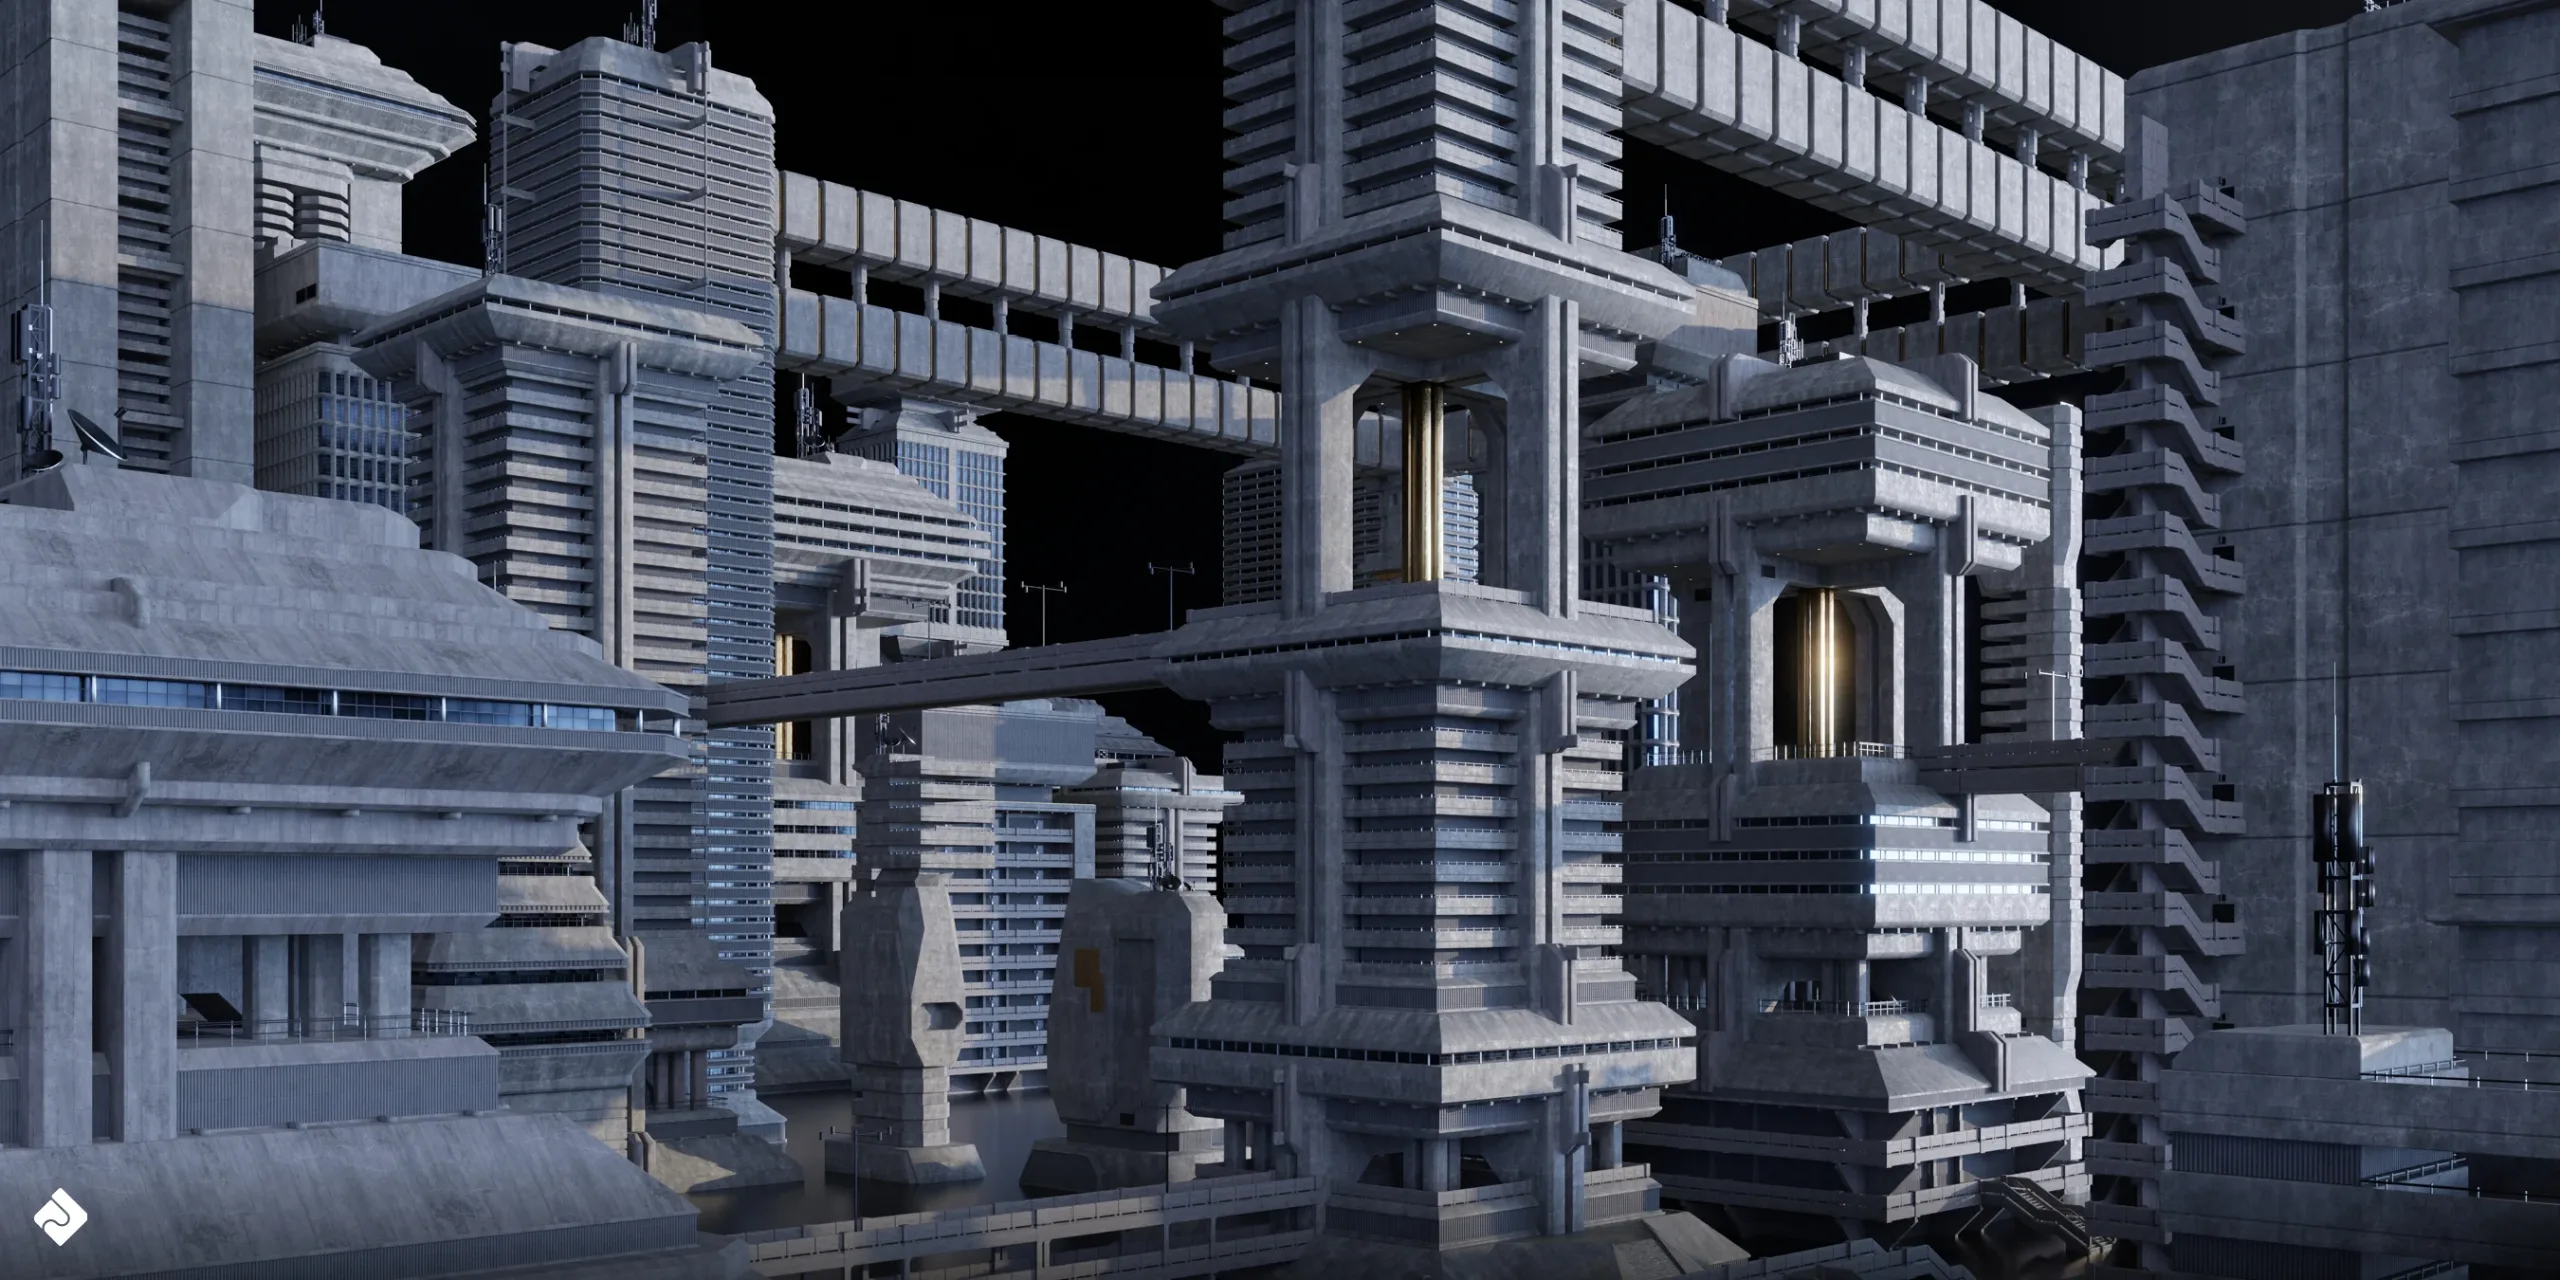 Brutalist Dystopia - Concrete Buildings & Modular Environment Assets Blender 3D Kitbash Pack